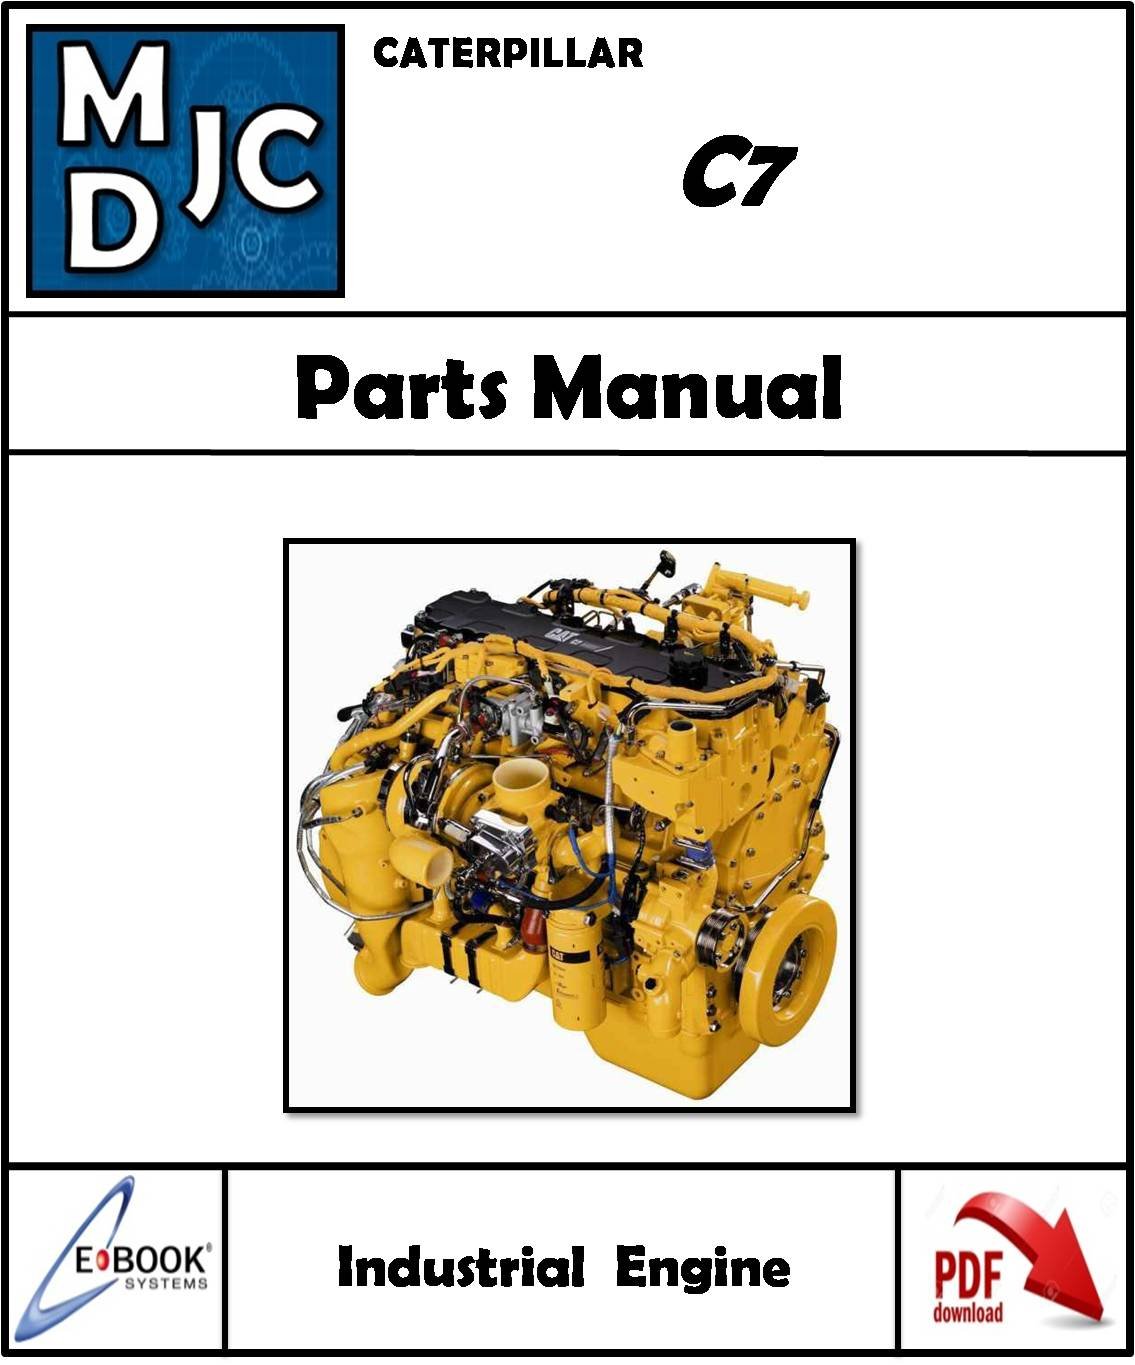 Catalogo de Partes Motor Caterpillar C7 Industrial